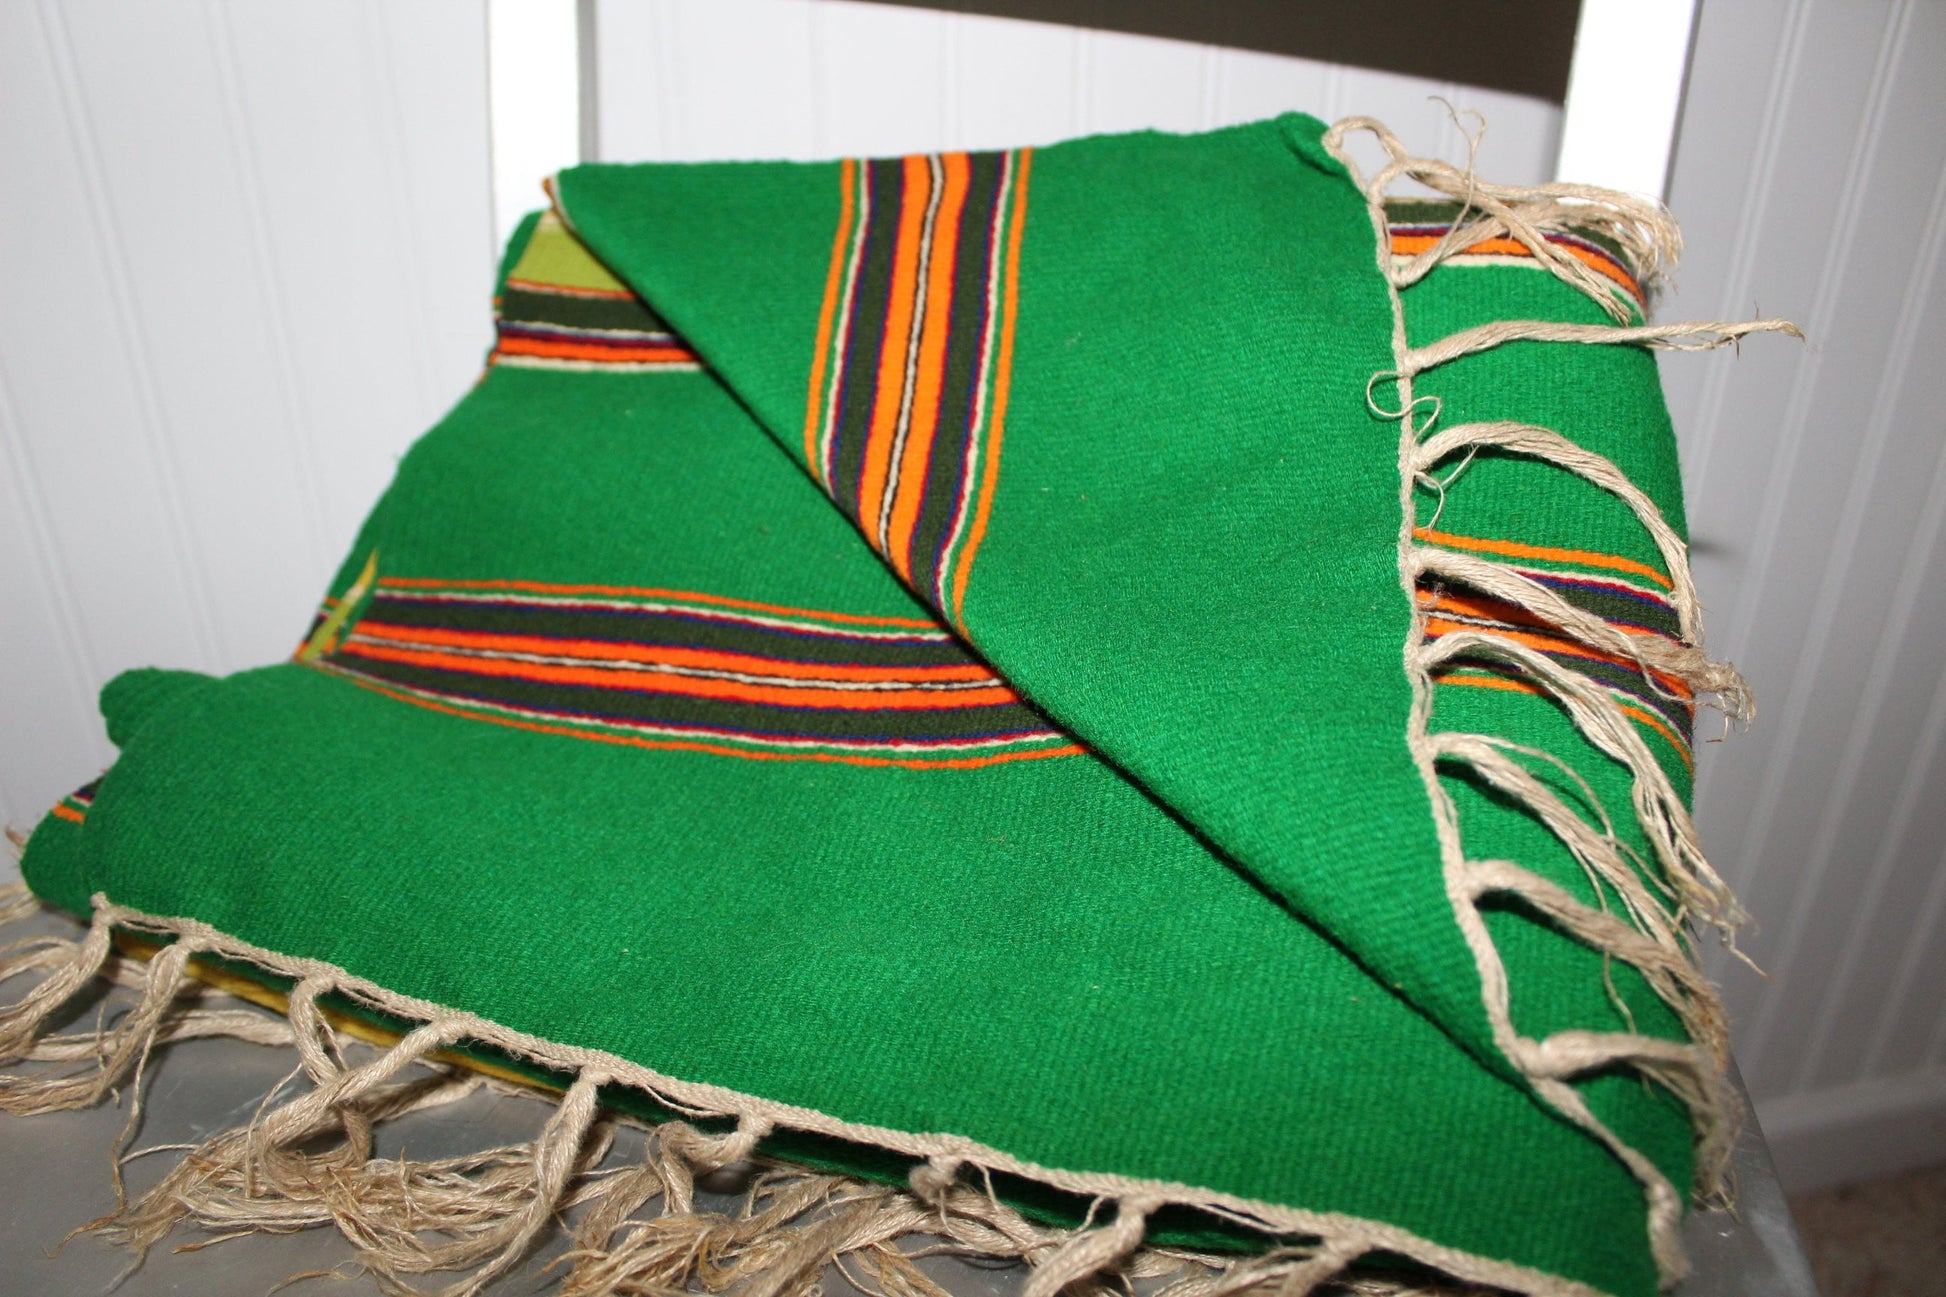 Estate Ukraine Woven Wool Blend Runner Bed Decor Shawl 26" X 78" Bright Green Orange Yellow